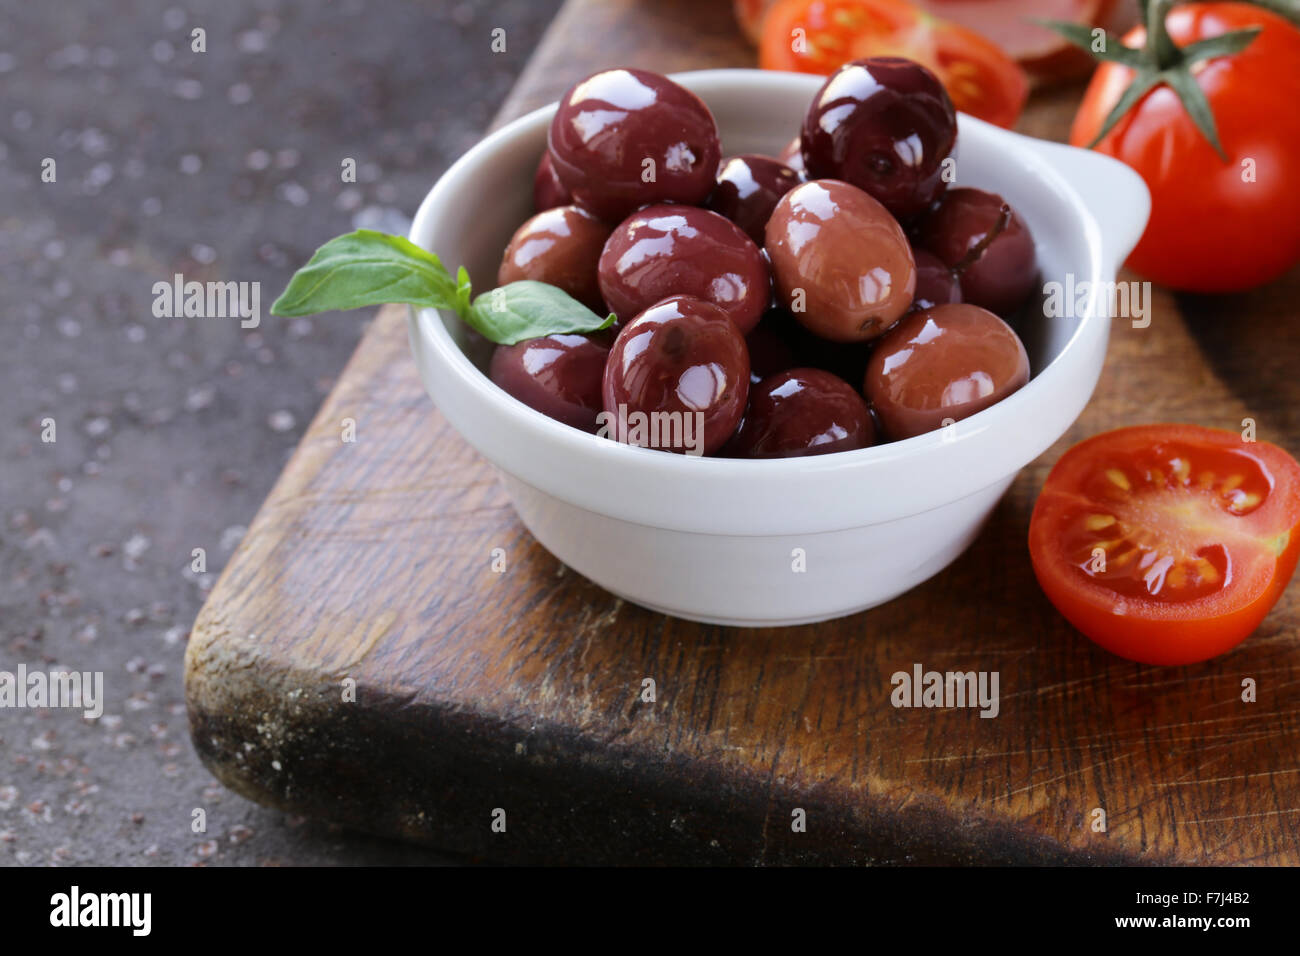 Italian food still life - olives, tomatoes, basil, prosciutto ham Stock Photo